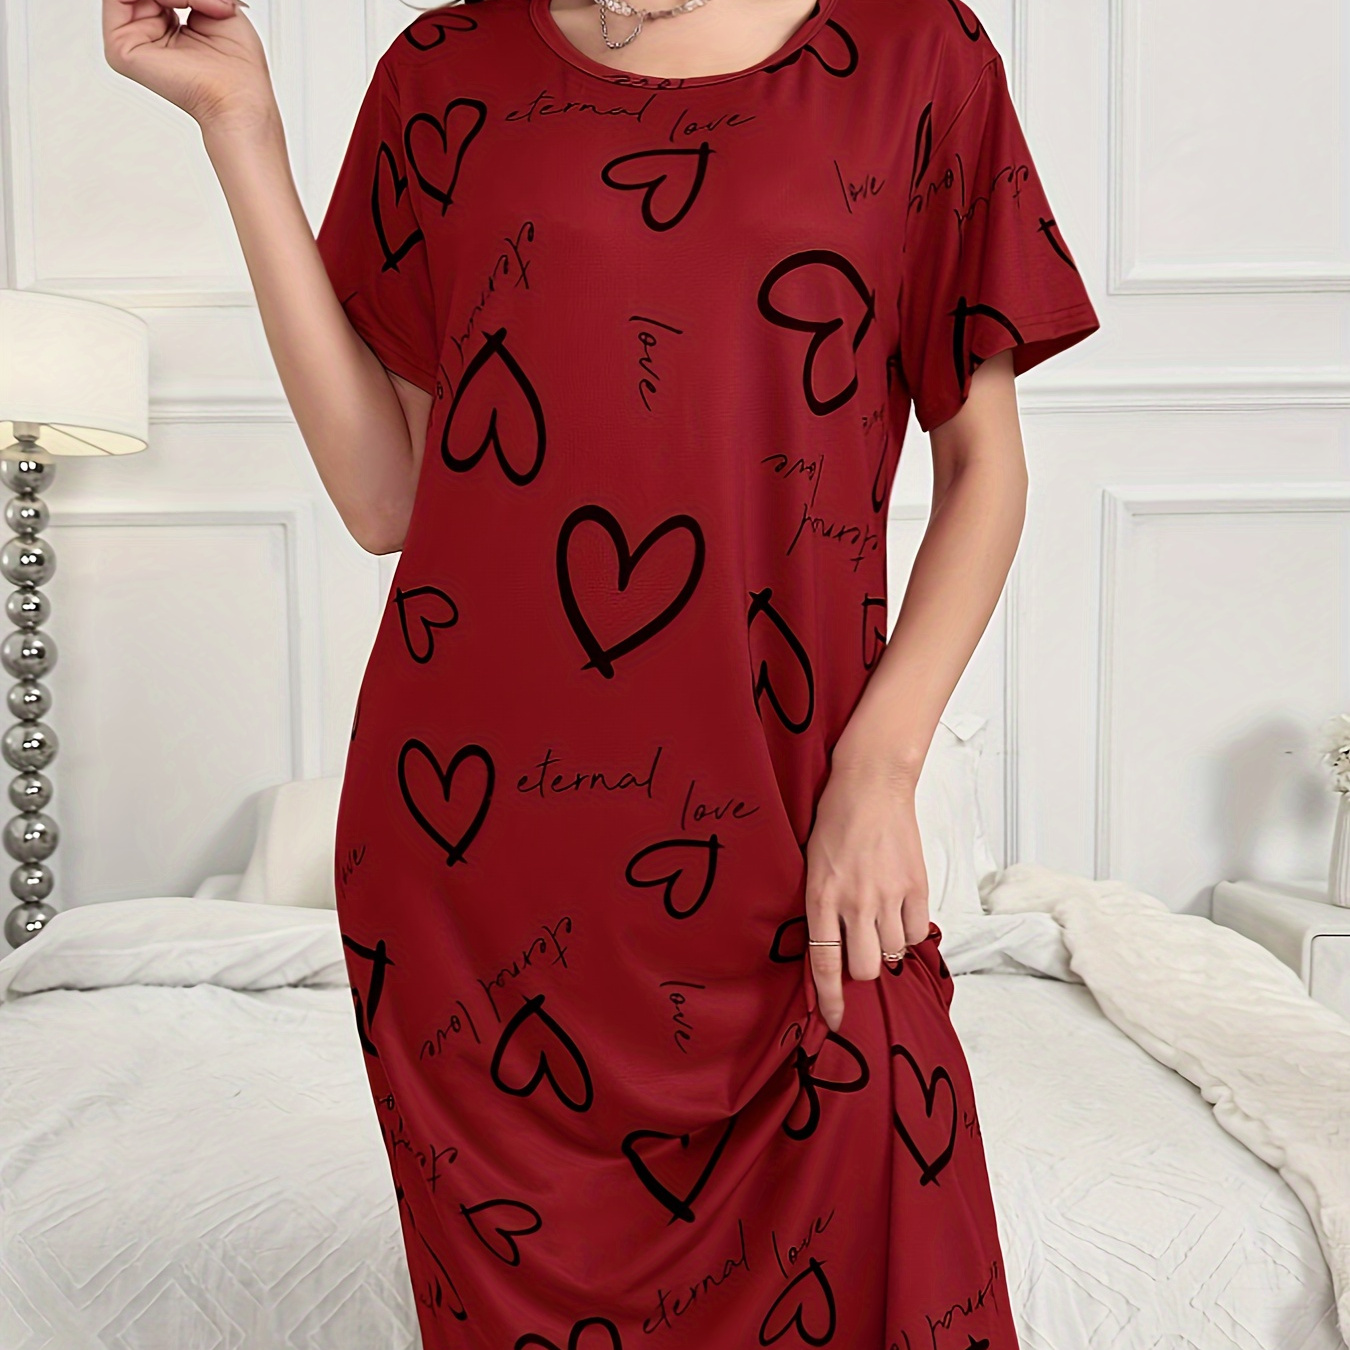 

Women's Heart & Letter Print Casual Sleepwear Dress, Short Sleeve Round Neck Tee Dress, Comfortable Nightgown